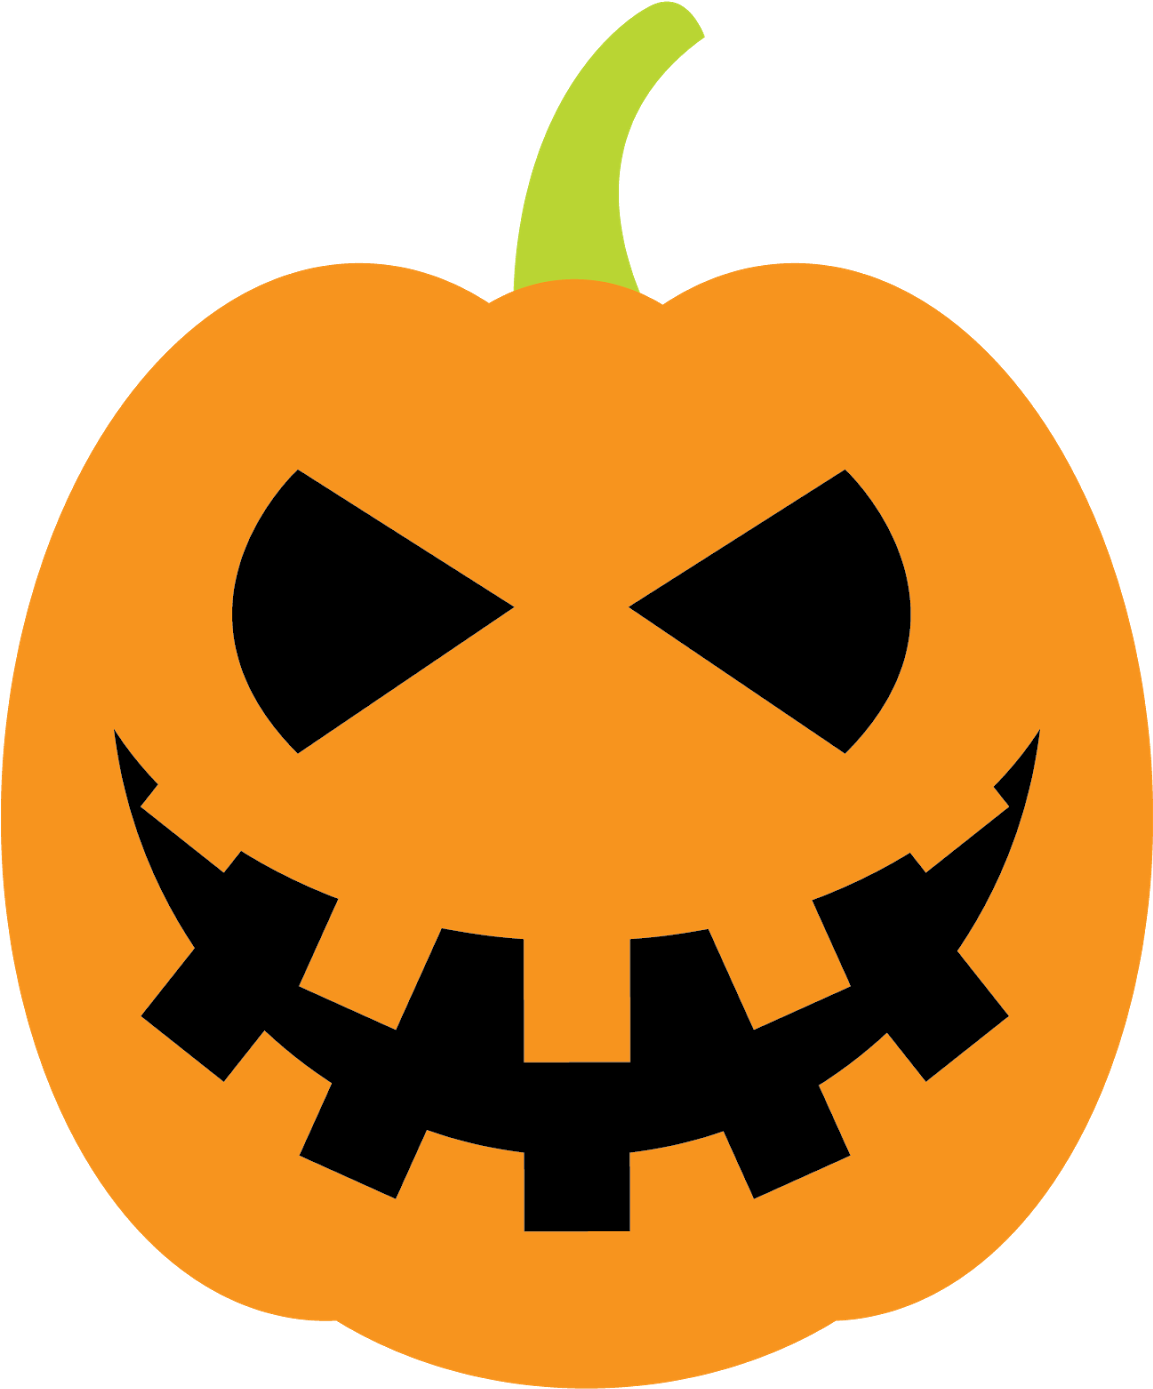 I Hope Everyone Had A Great And Fun Halloween And I - Jack-o'-lantern (1600x1600)